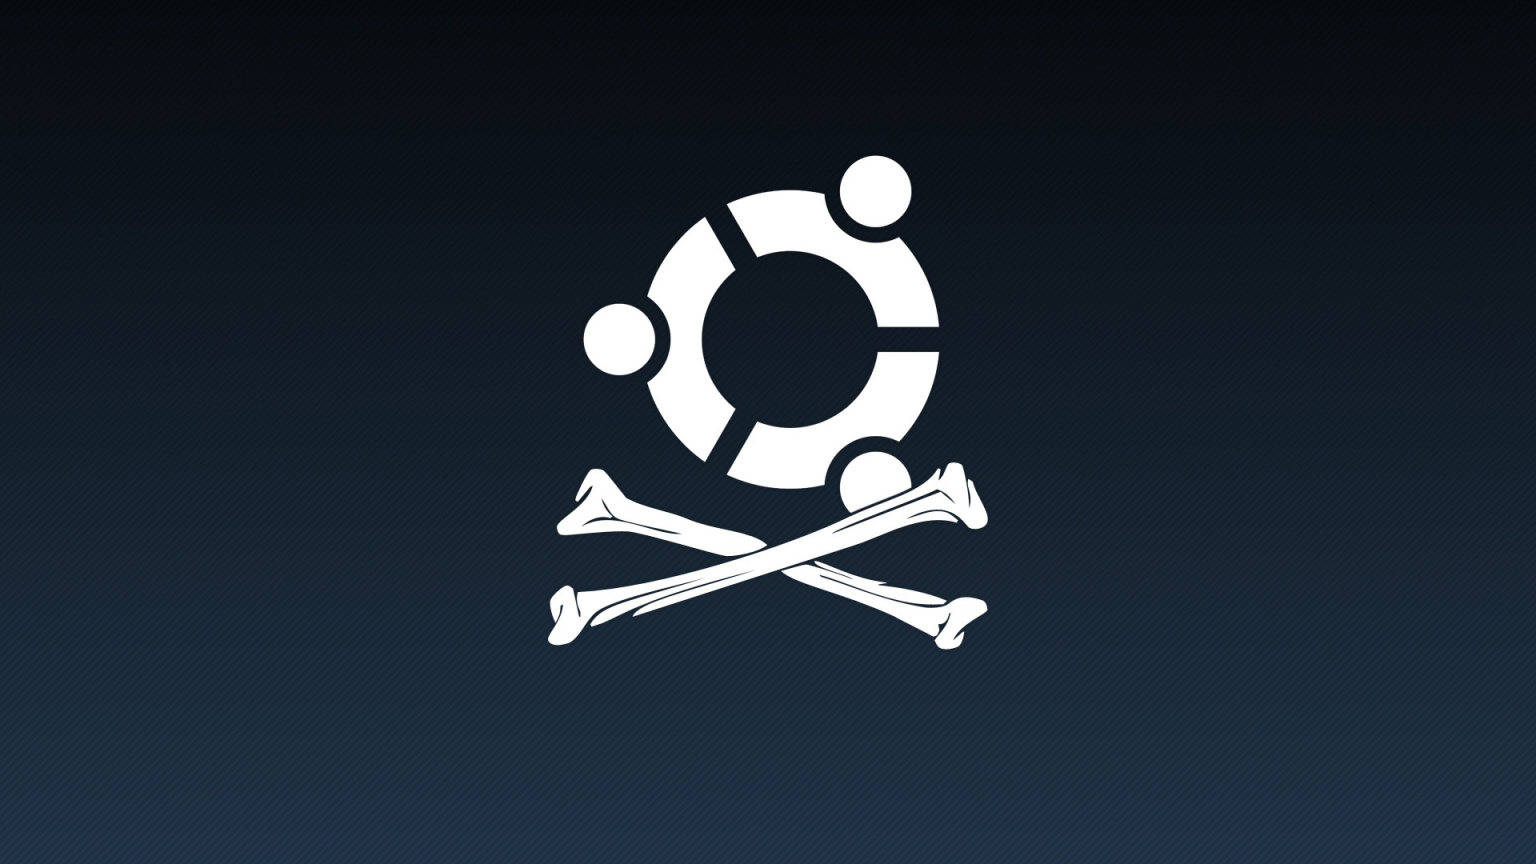 Pirate Ubuntu for 1536 x 864 HDTV resolution